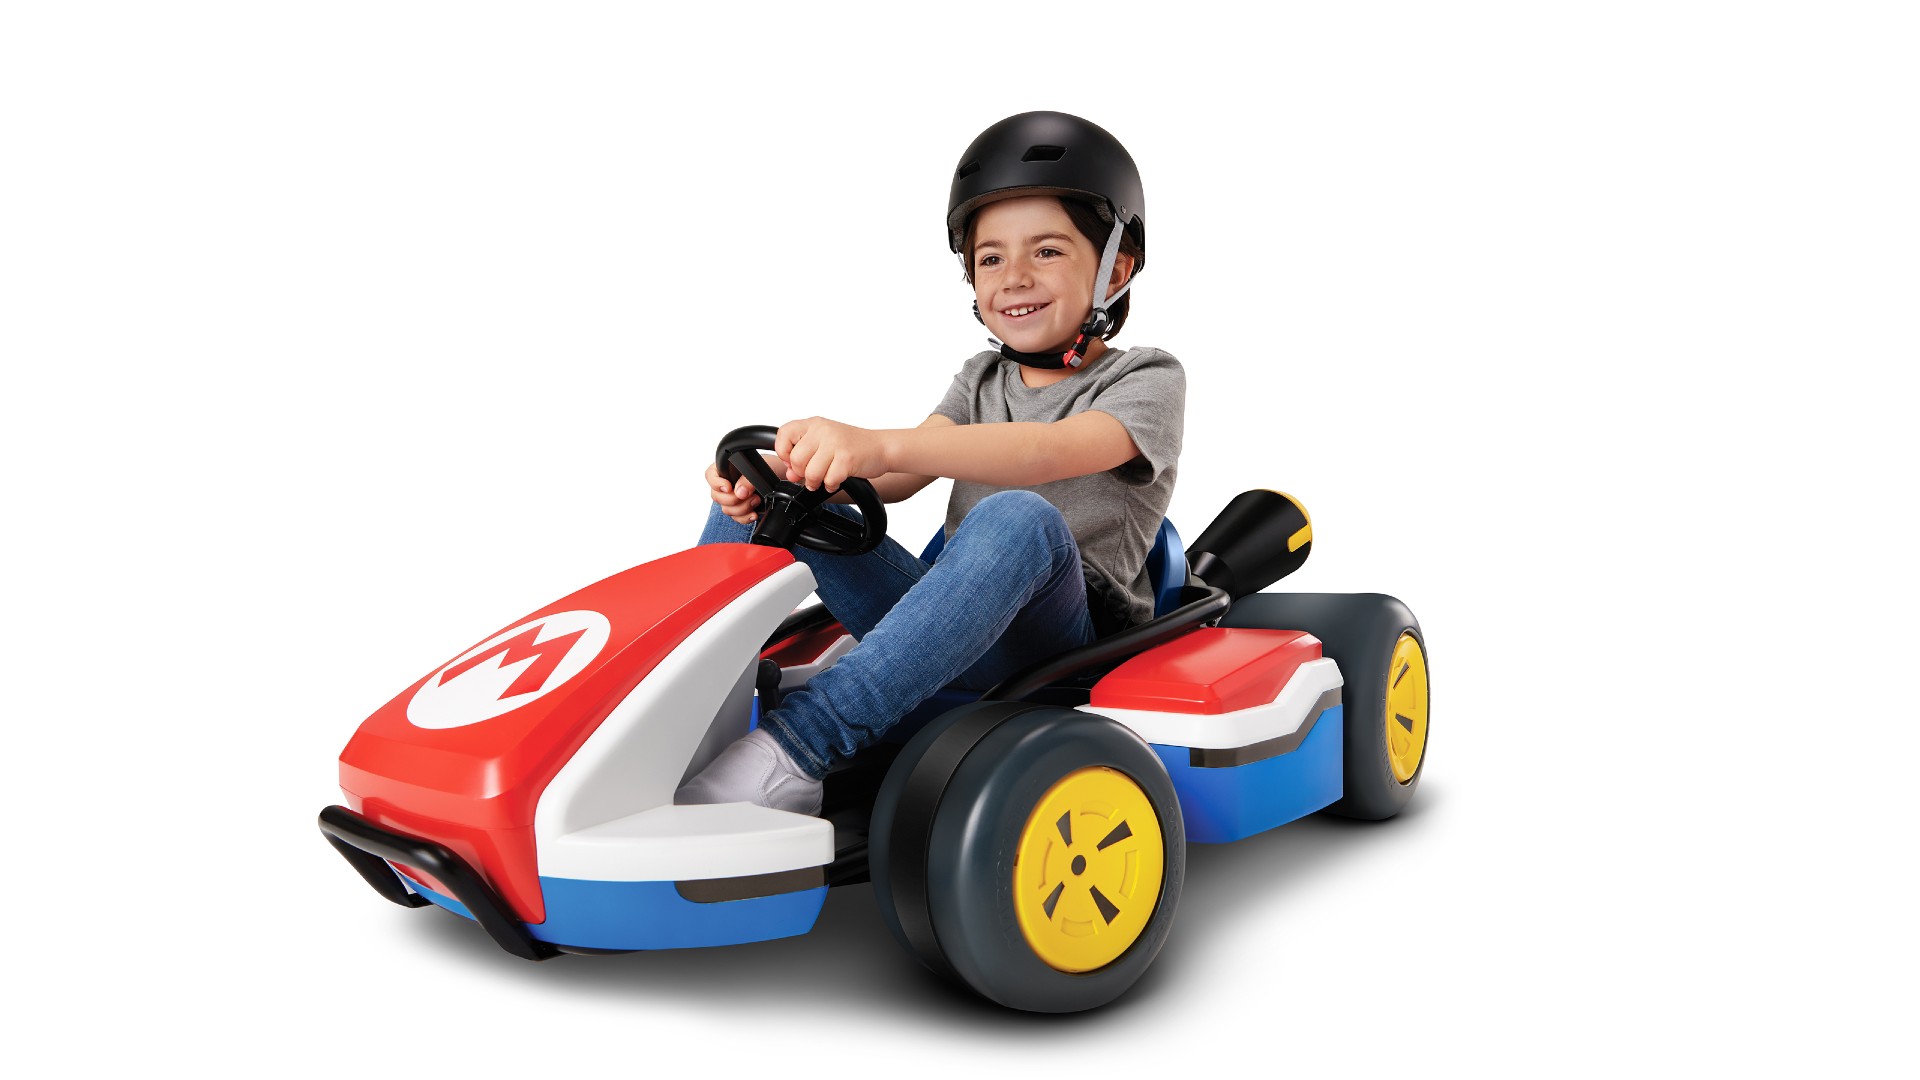 coche de Mario Kart real